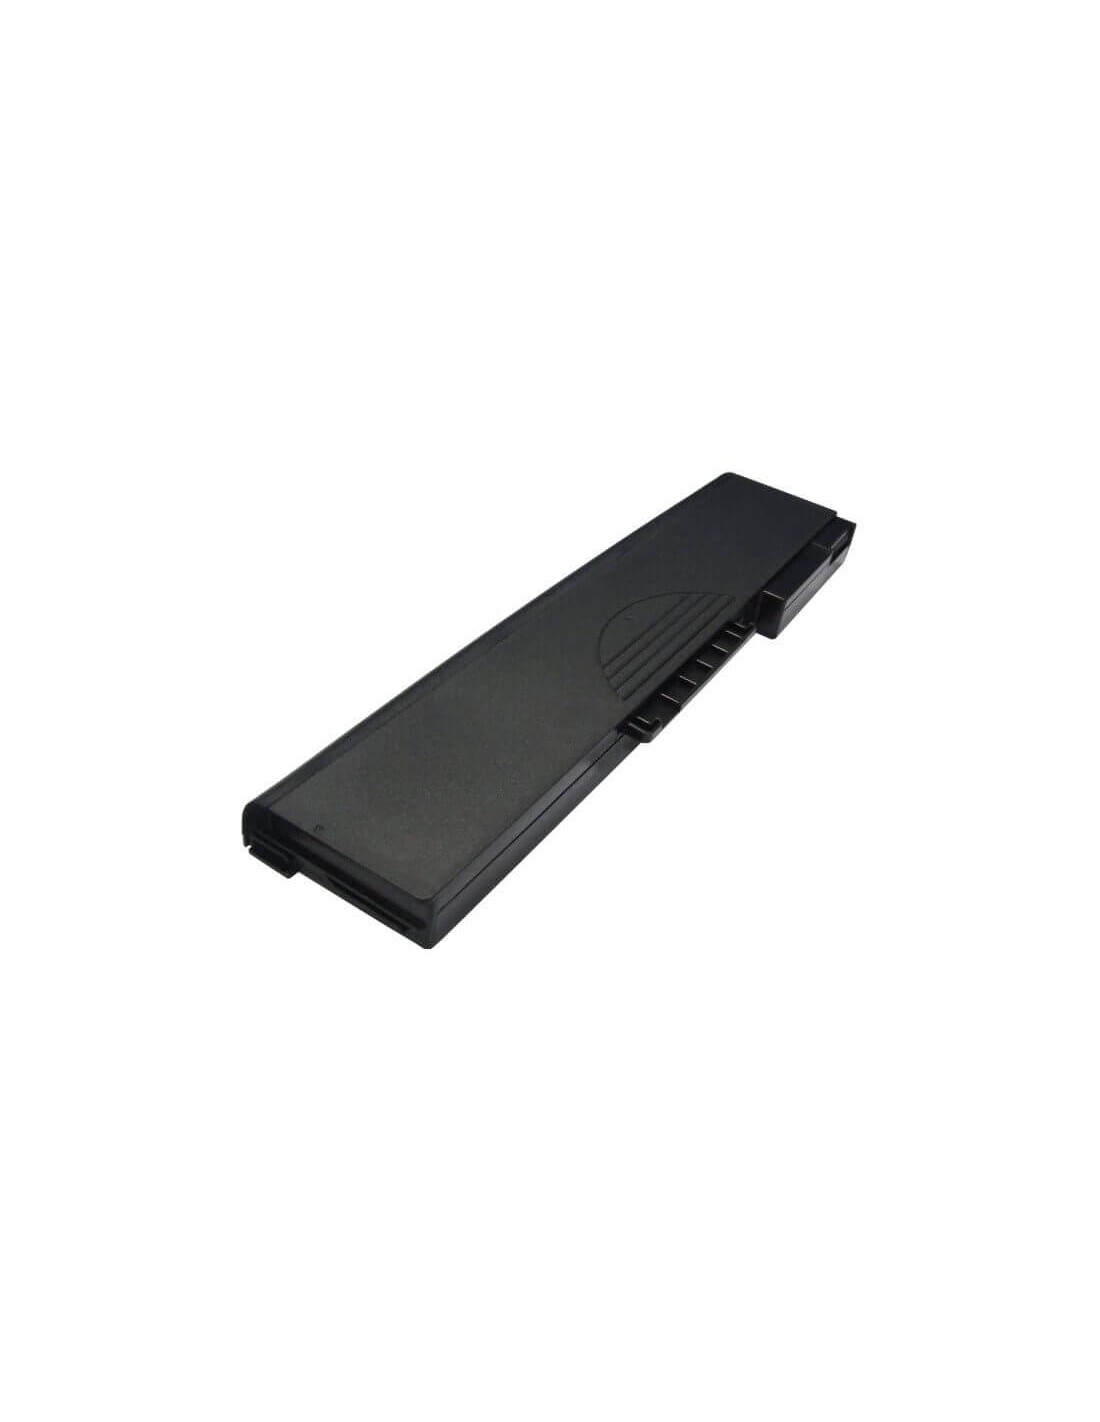 Dark grey Battery for Acer Travelmate 242fx(ms2138), Aspire 1363wlm, Aspire 1363wlmi 14.8V, 4400mAh - 65.12Wh